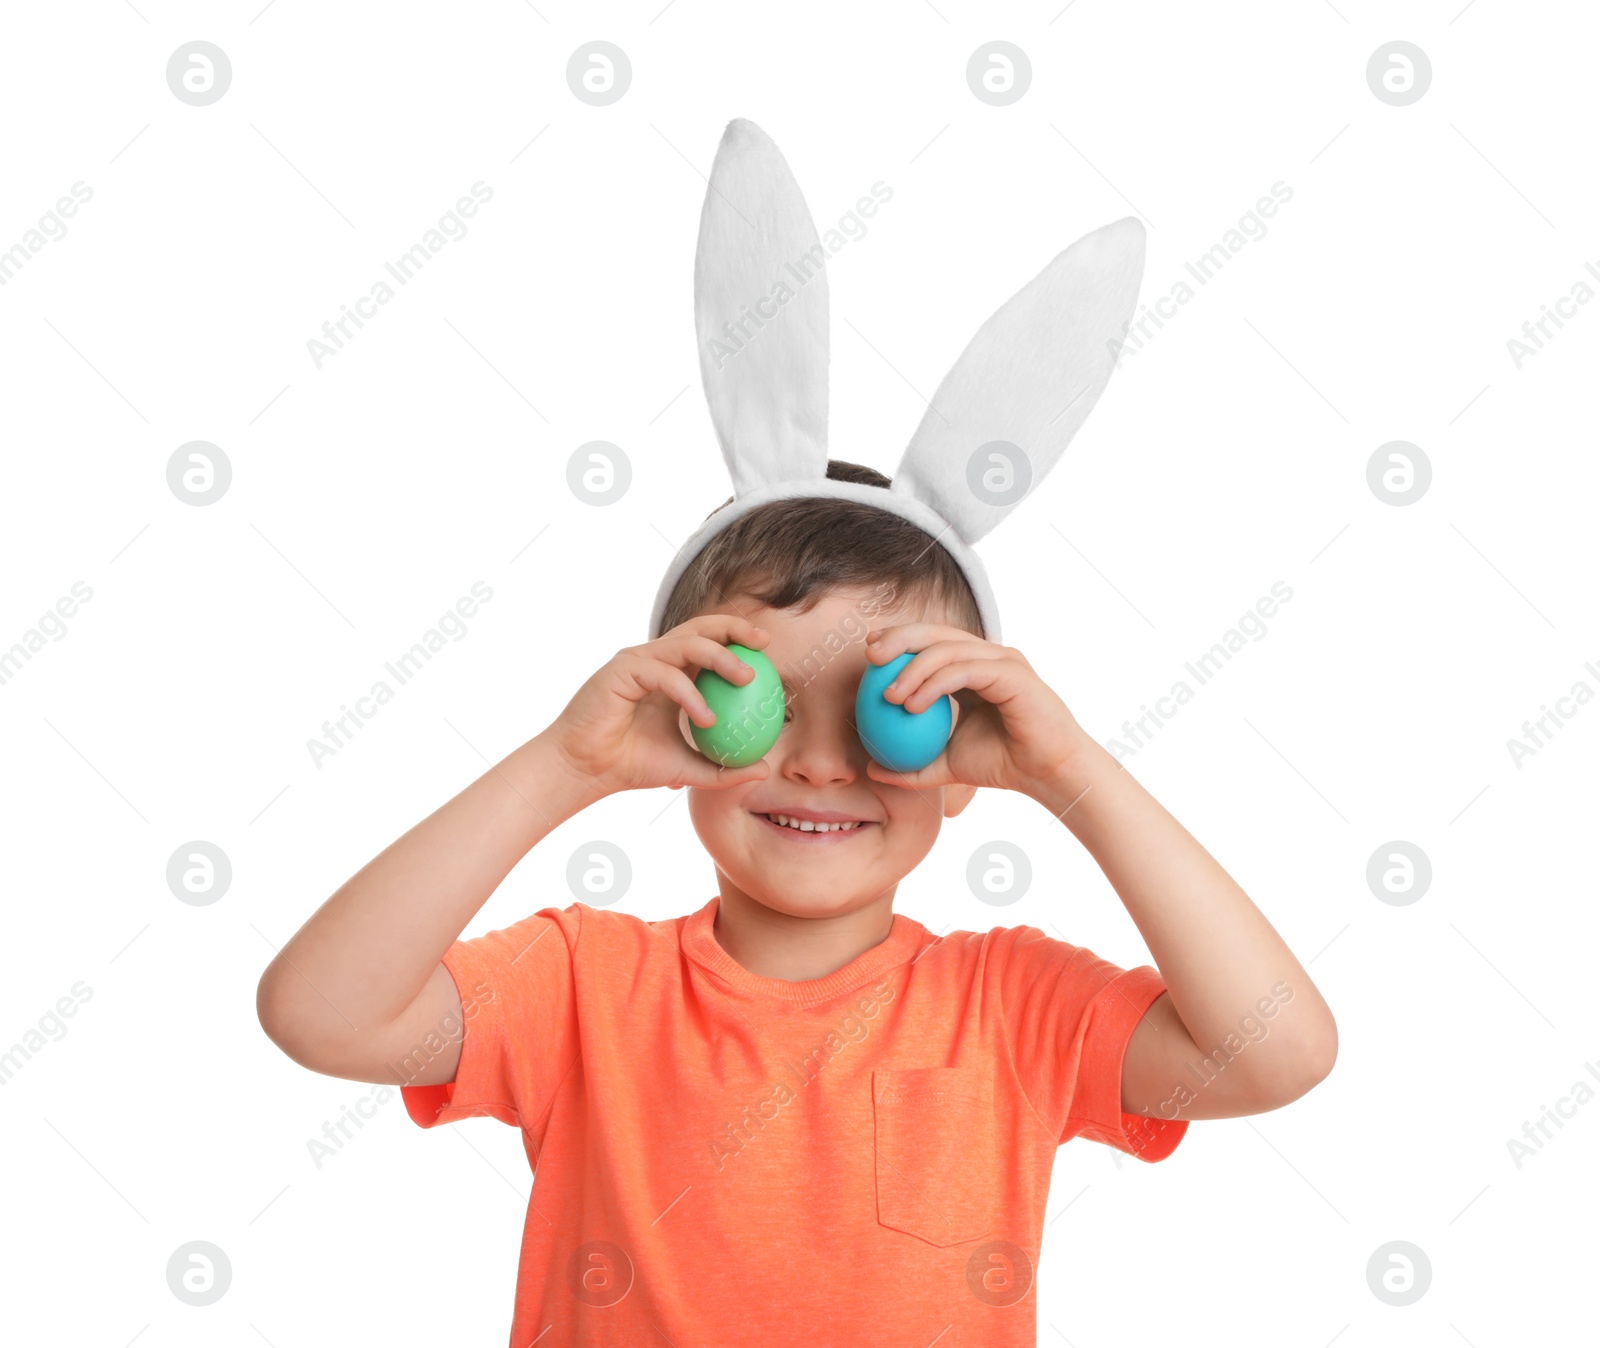 Photo of Little boy in bunny ears headband holding Easter eggs near eyes on white background